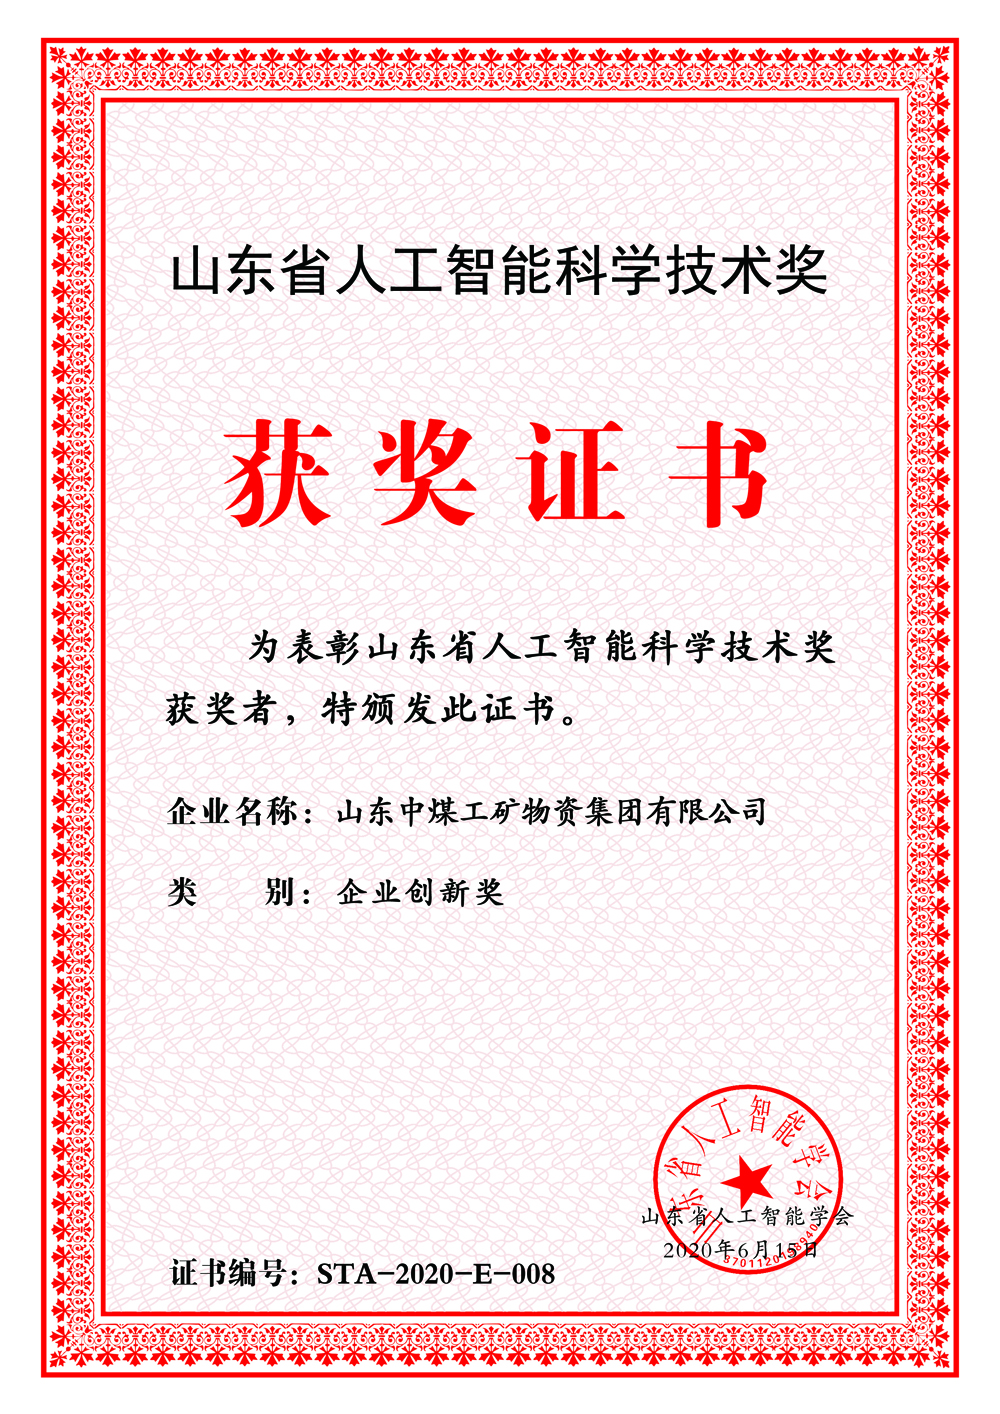 Warm Congratulations To Shandong Tiandun  For Winning The Shandong Artificial Intelligence Science And Technology Award